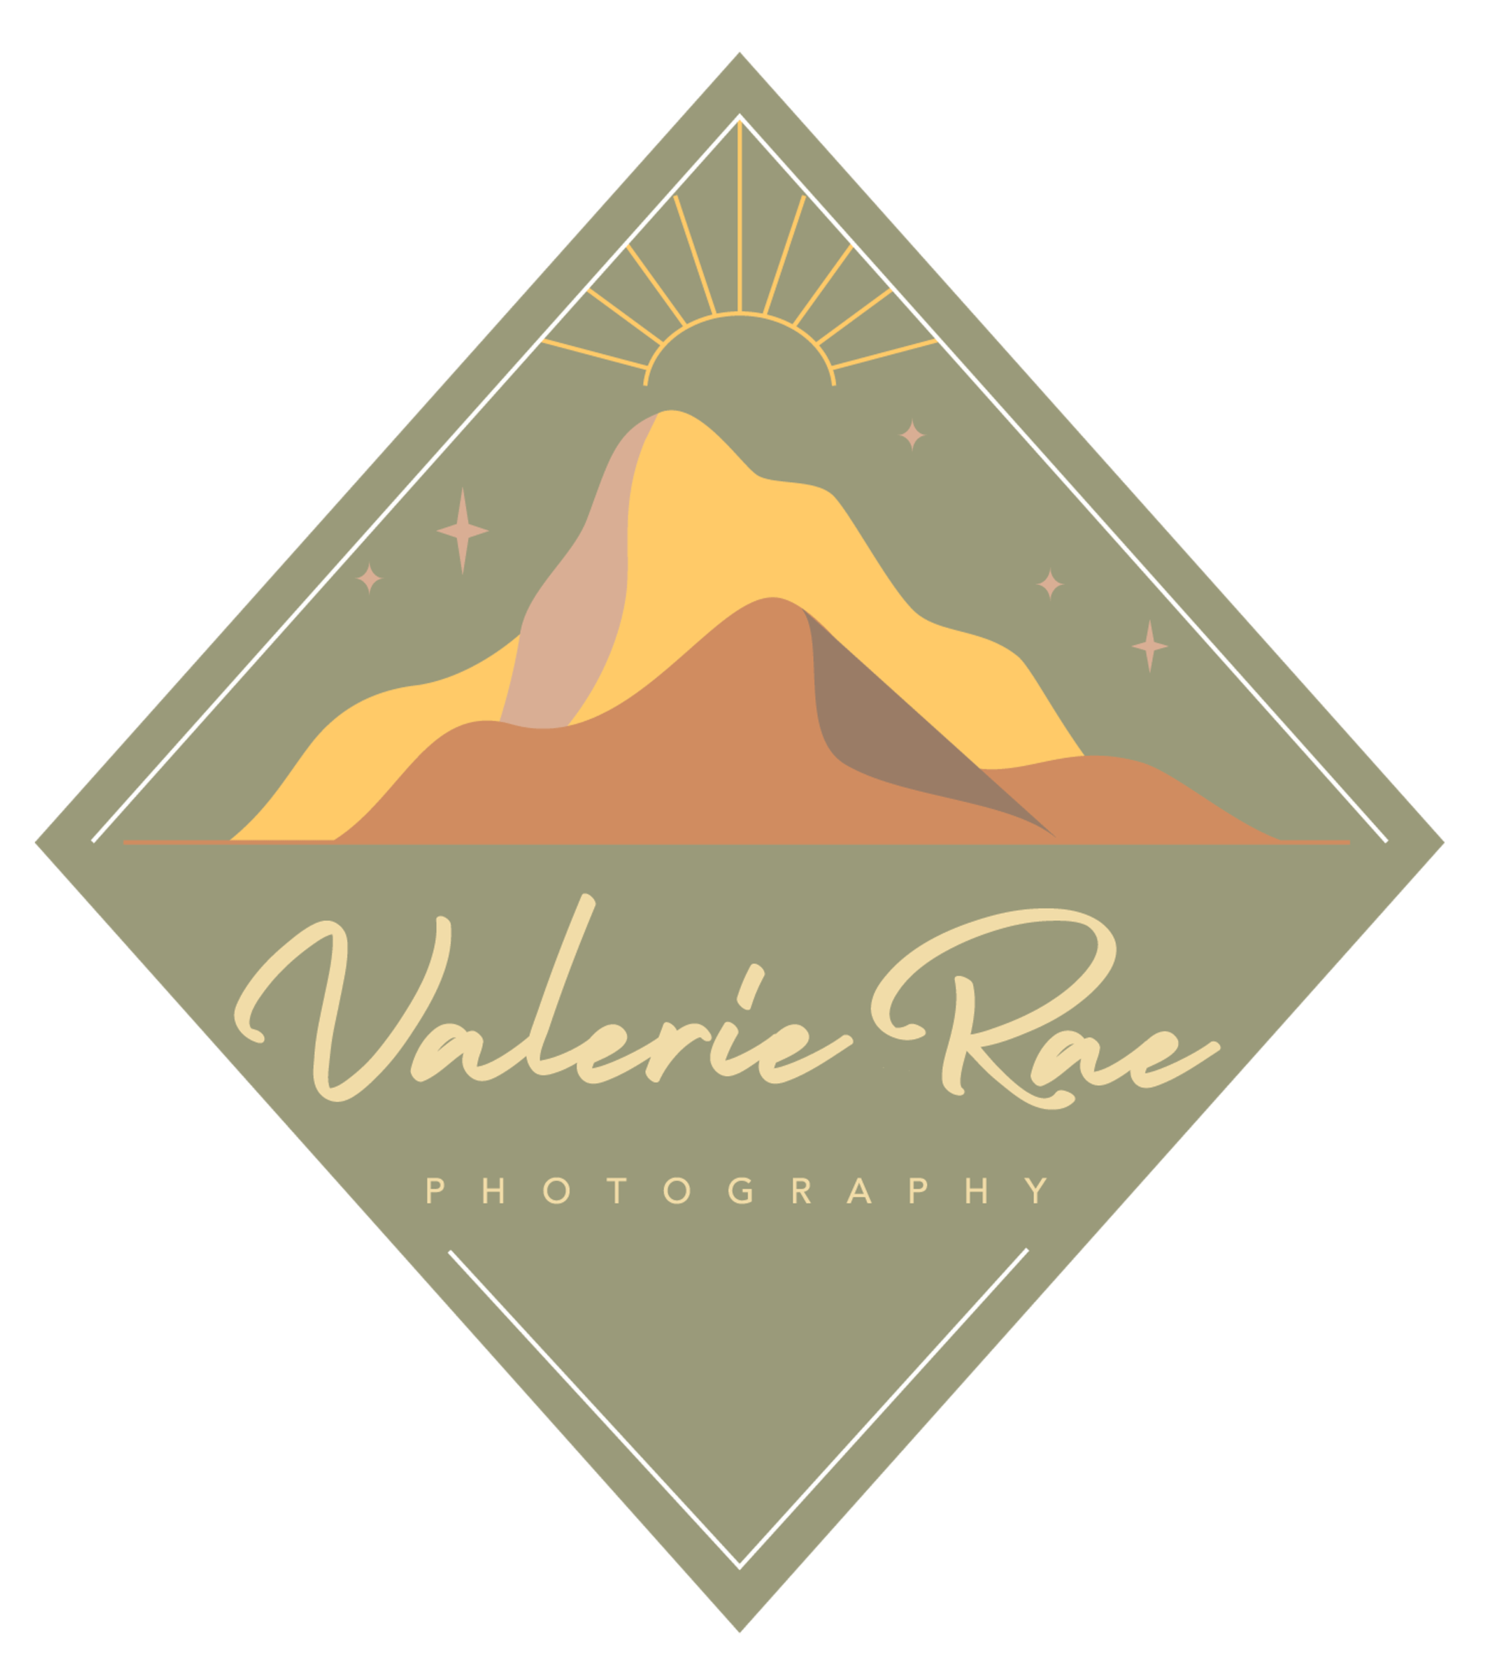 Valerie Rae